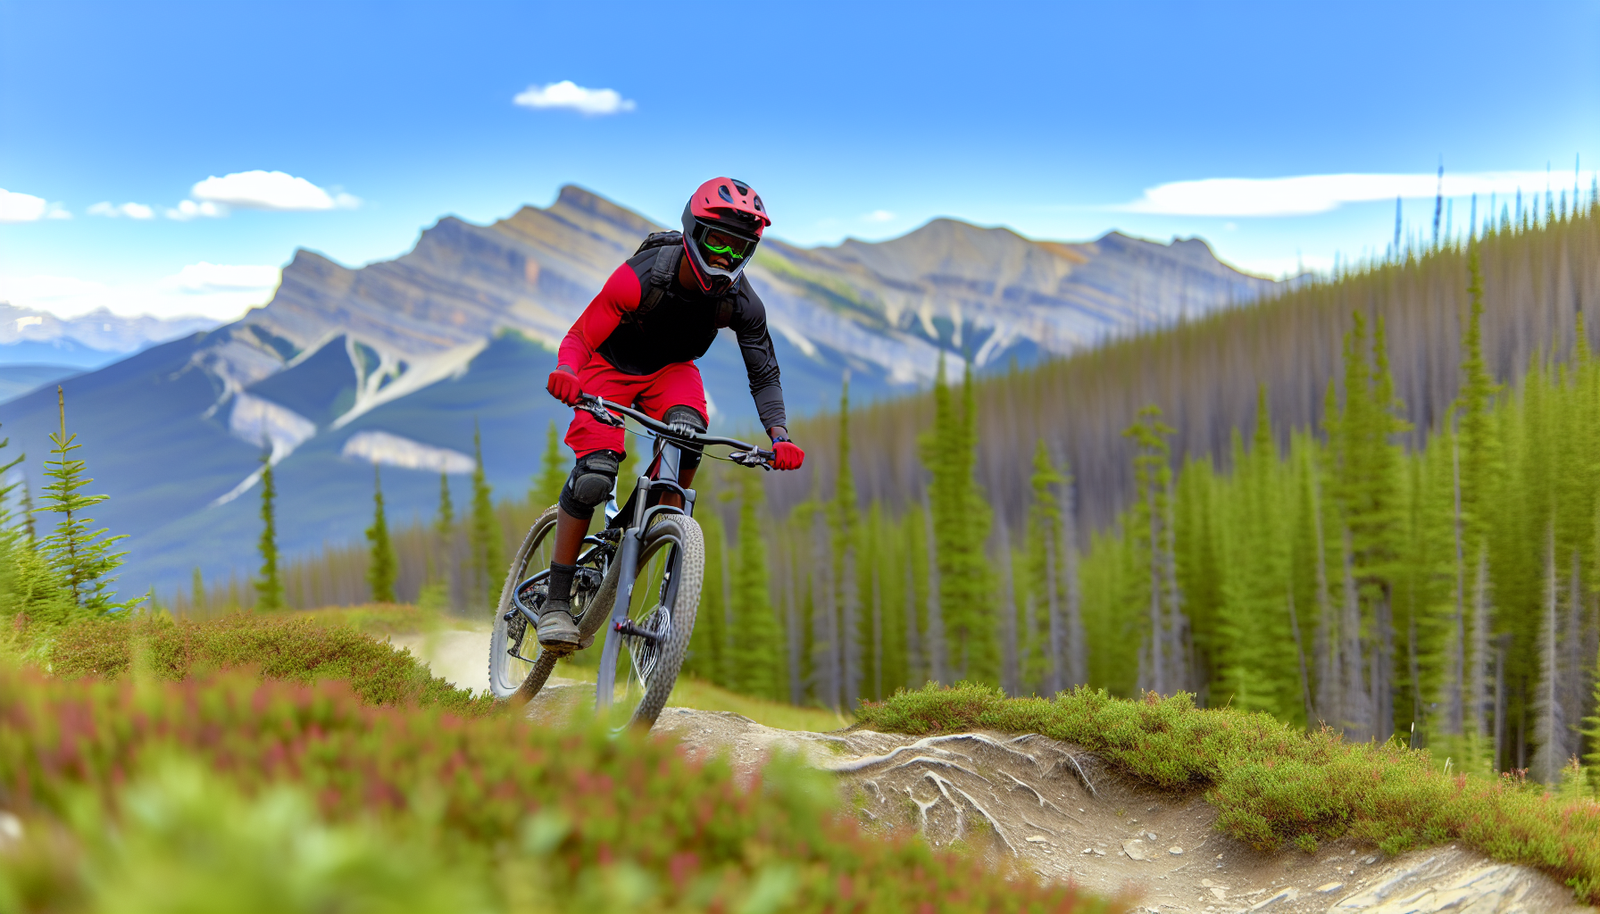 Thrilling mountain biking adventure in the Rockies